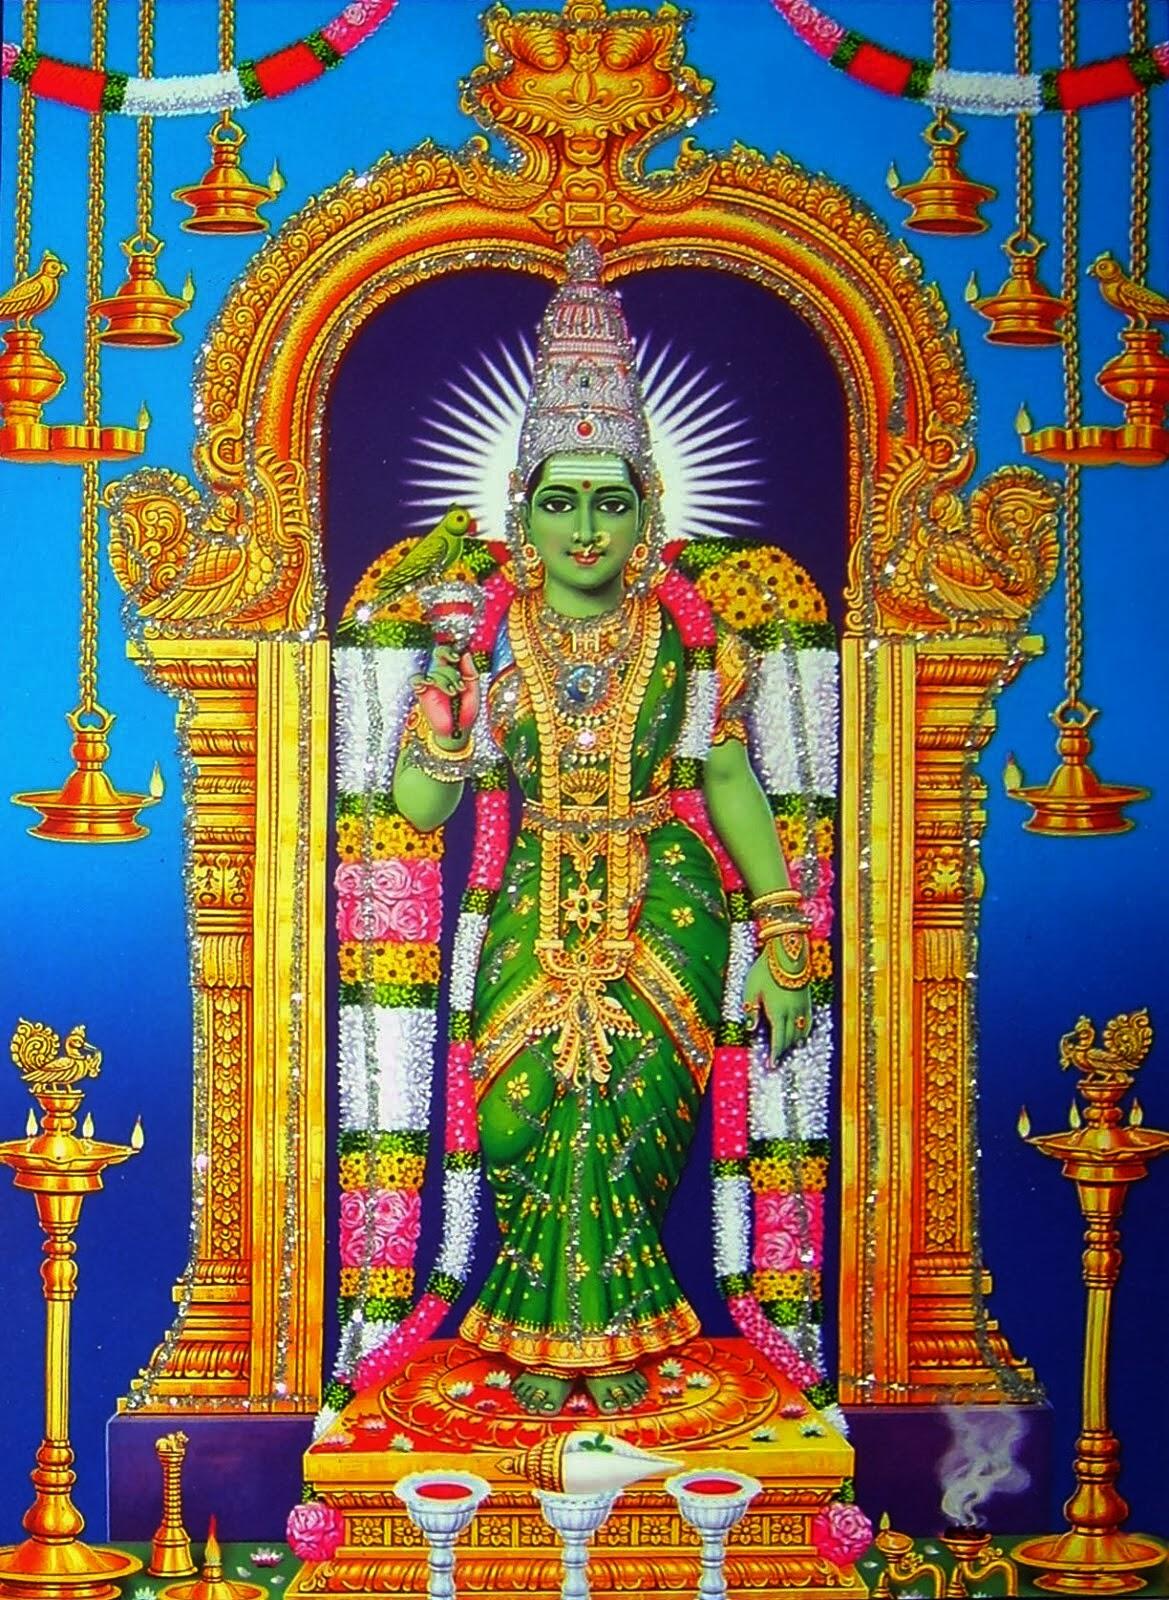 Goddess Madurai Meenakshi Amman Image & Wallpapers.